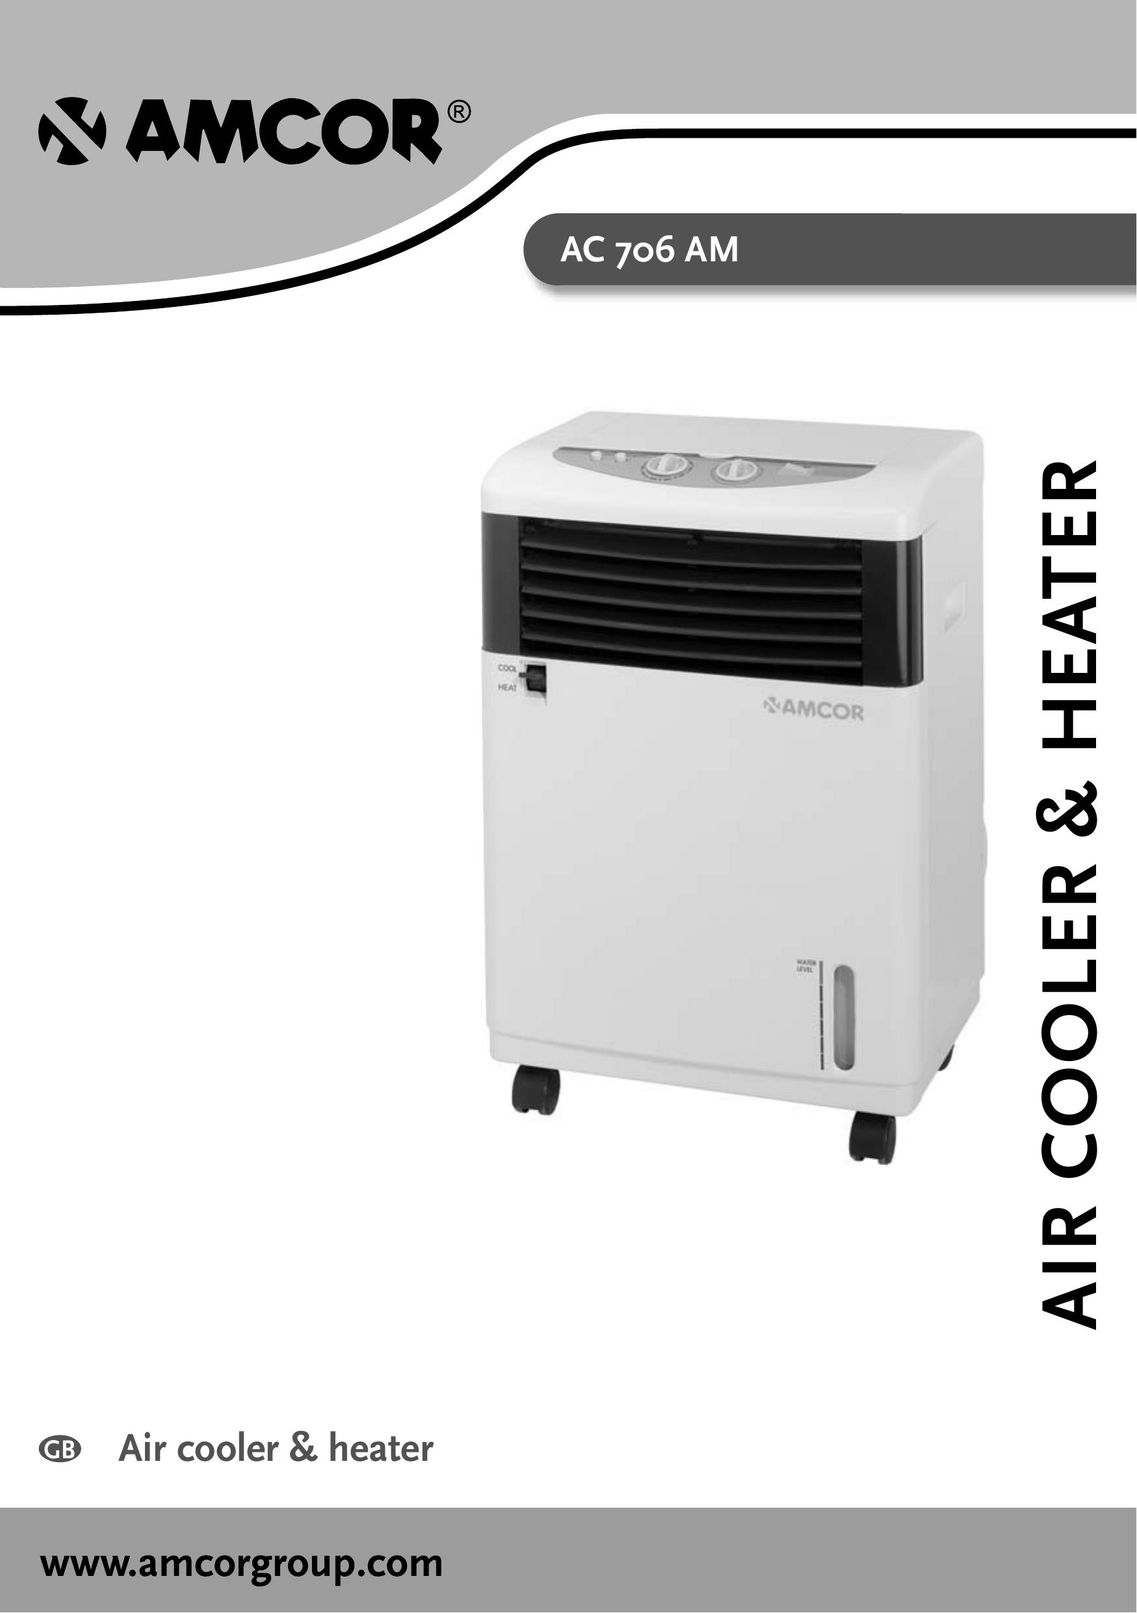 Amcor AC 706 AM Electric Heater User Manual